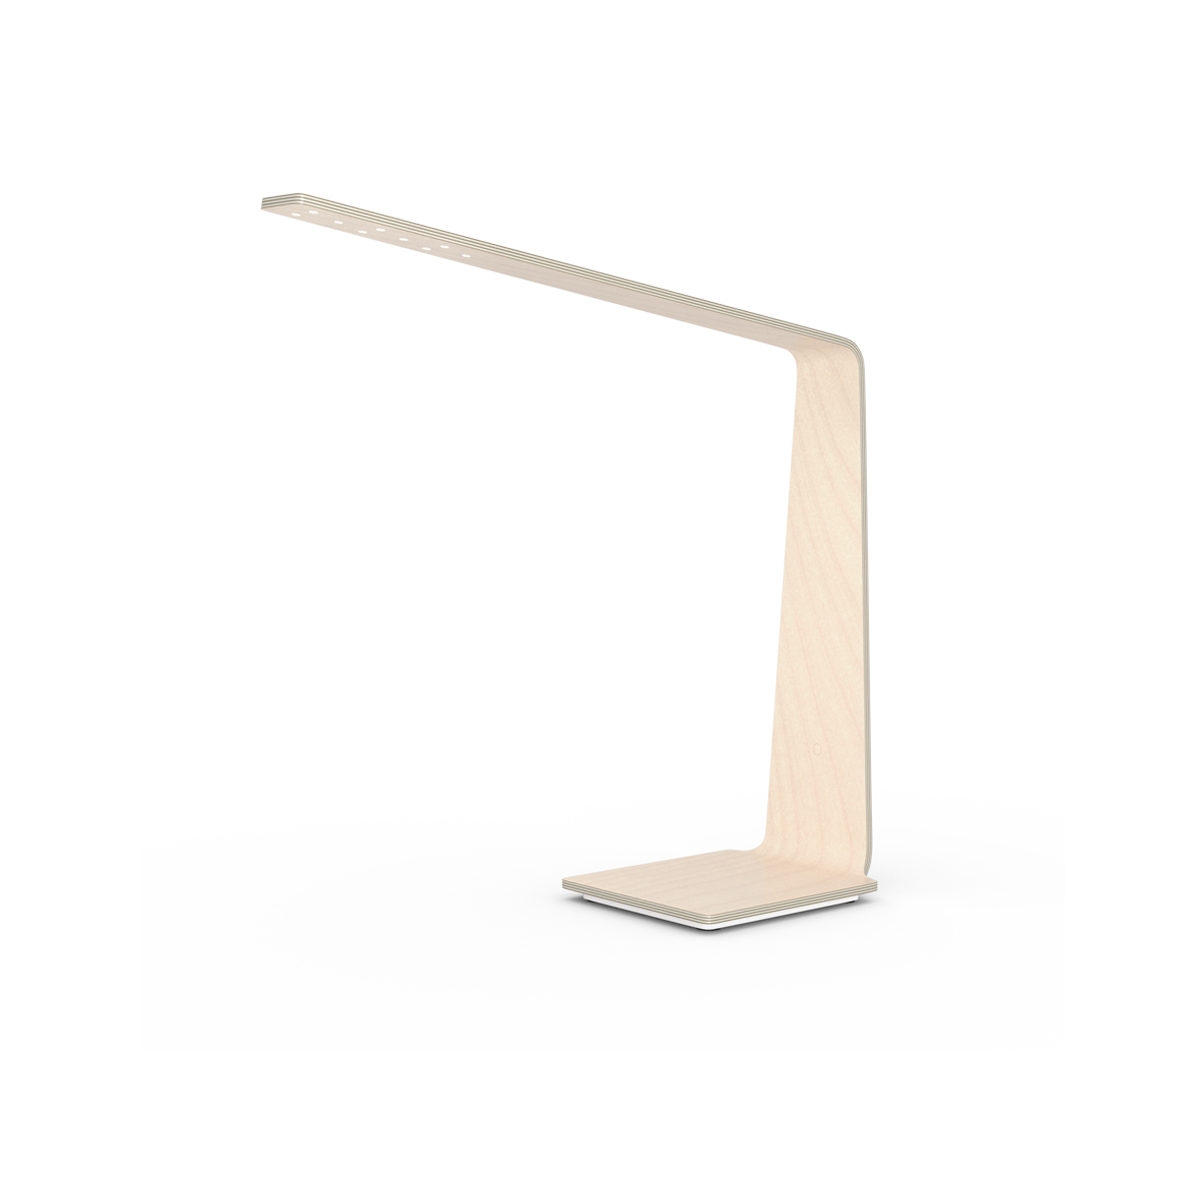 Planko by Tunto – 22 7/16″ x 21 7/16″ Portable, Table offers quality European interior lighting design | Zaneen Design